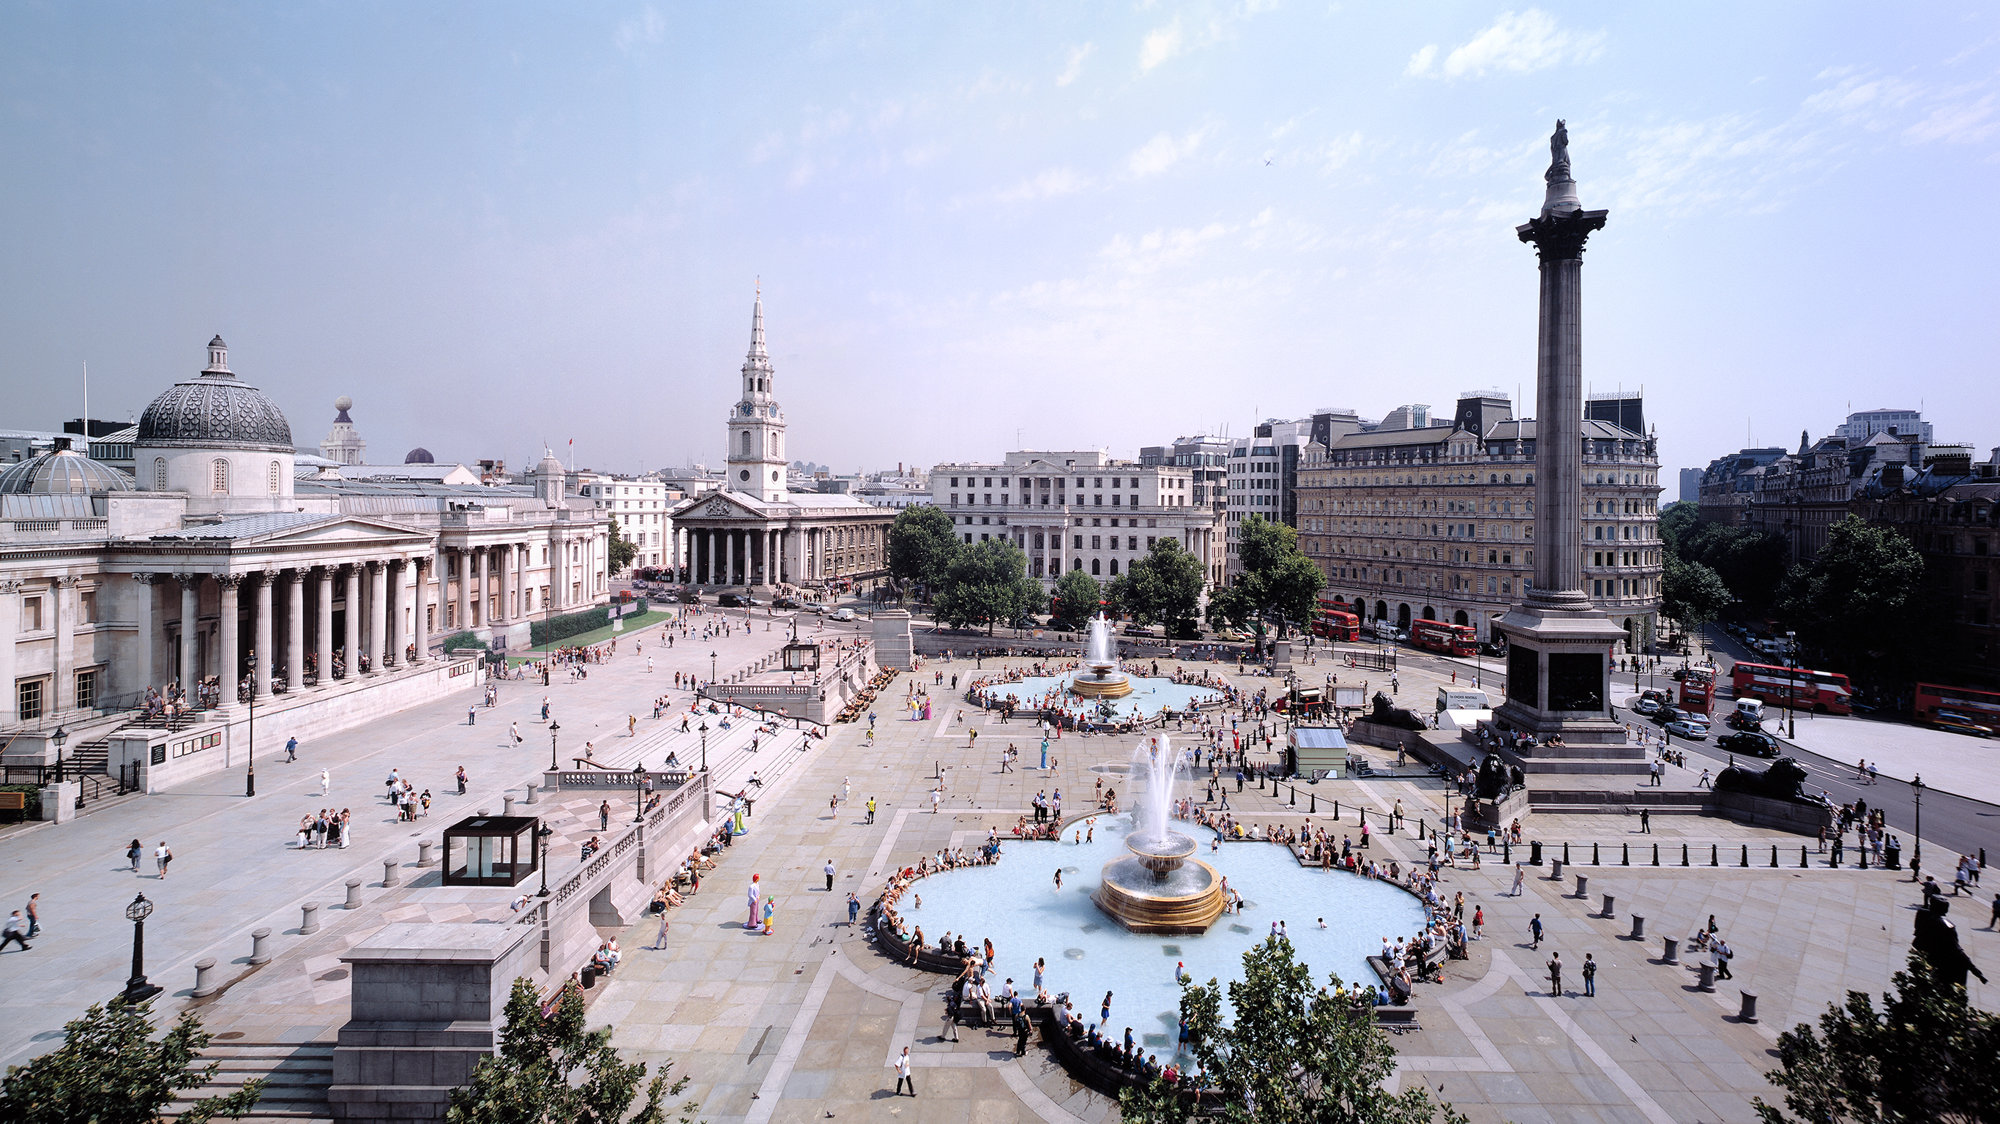 Trafalgar Square Wins London Award For Building In An Historic Context